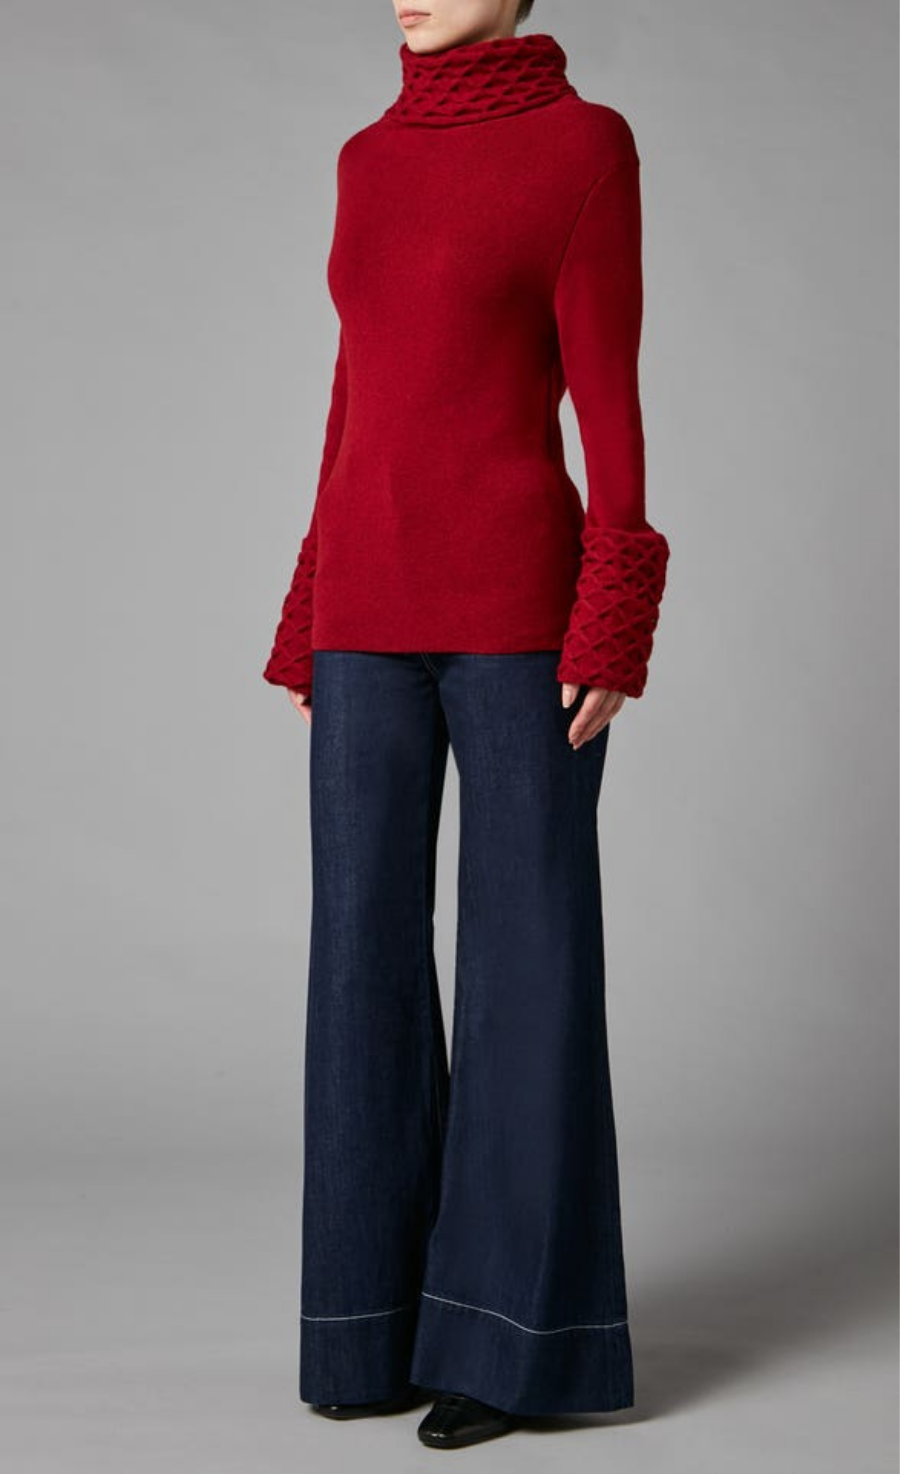 Honeycomb Knit Longer Sleeve Jumper - Ruby Red